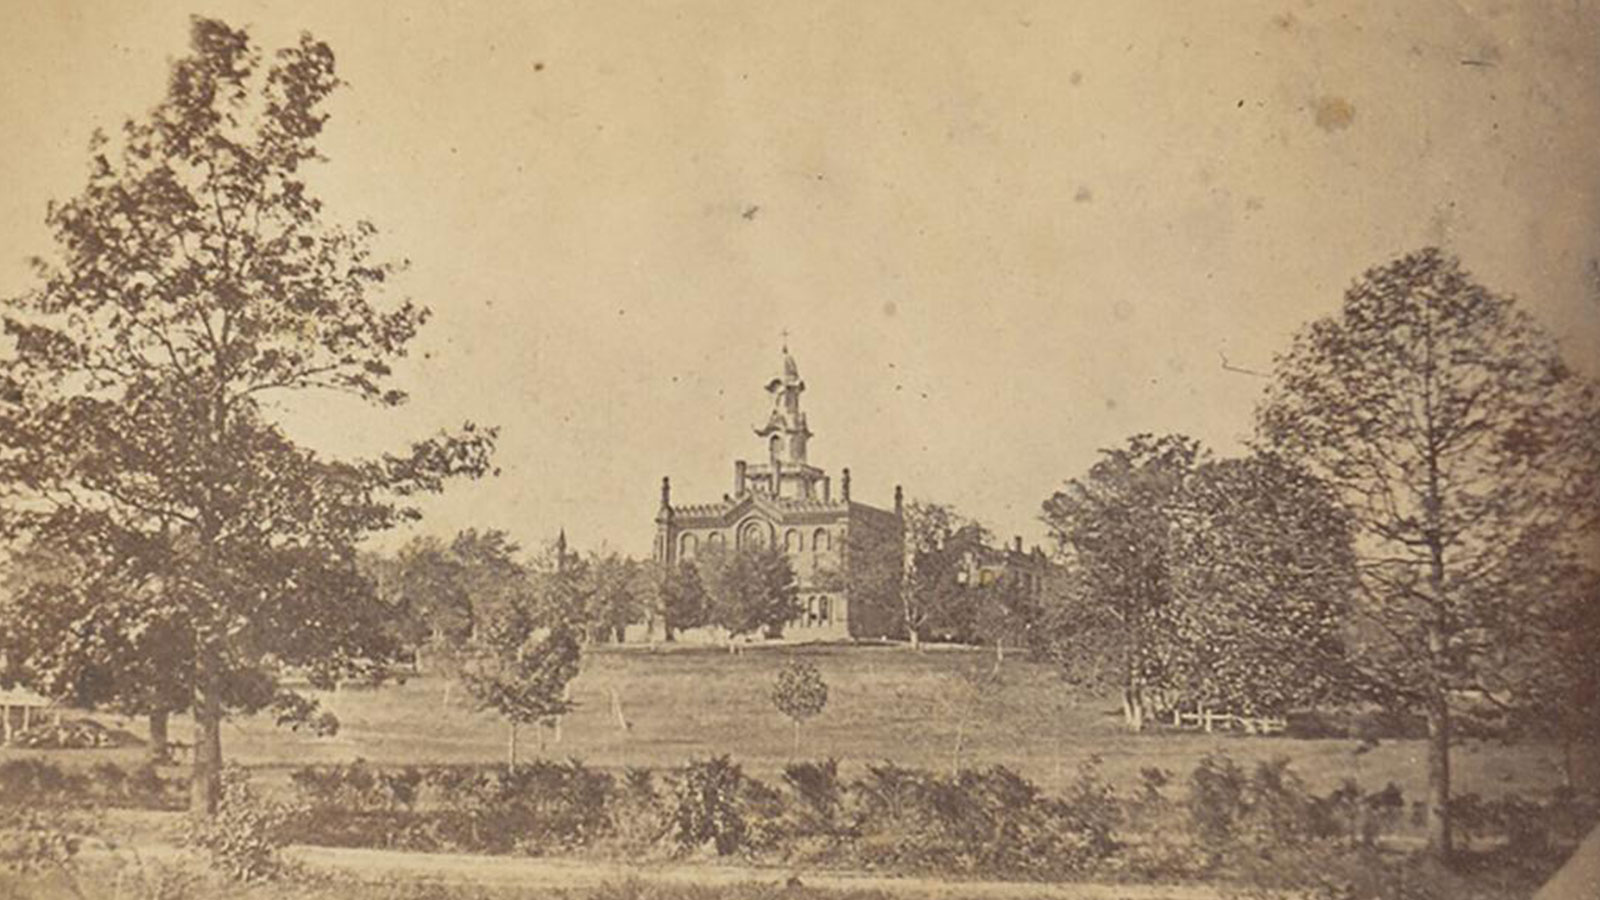 Virginia Theological Seminary 1863